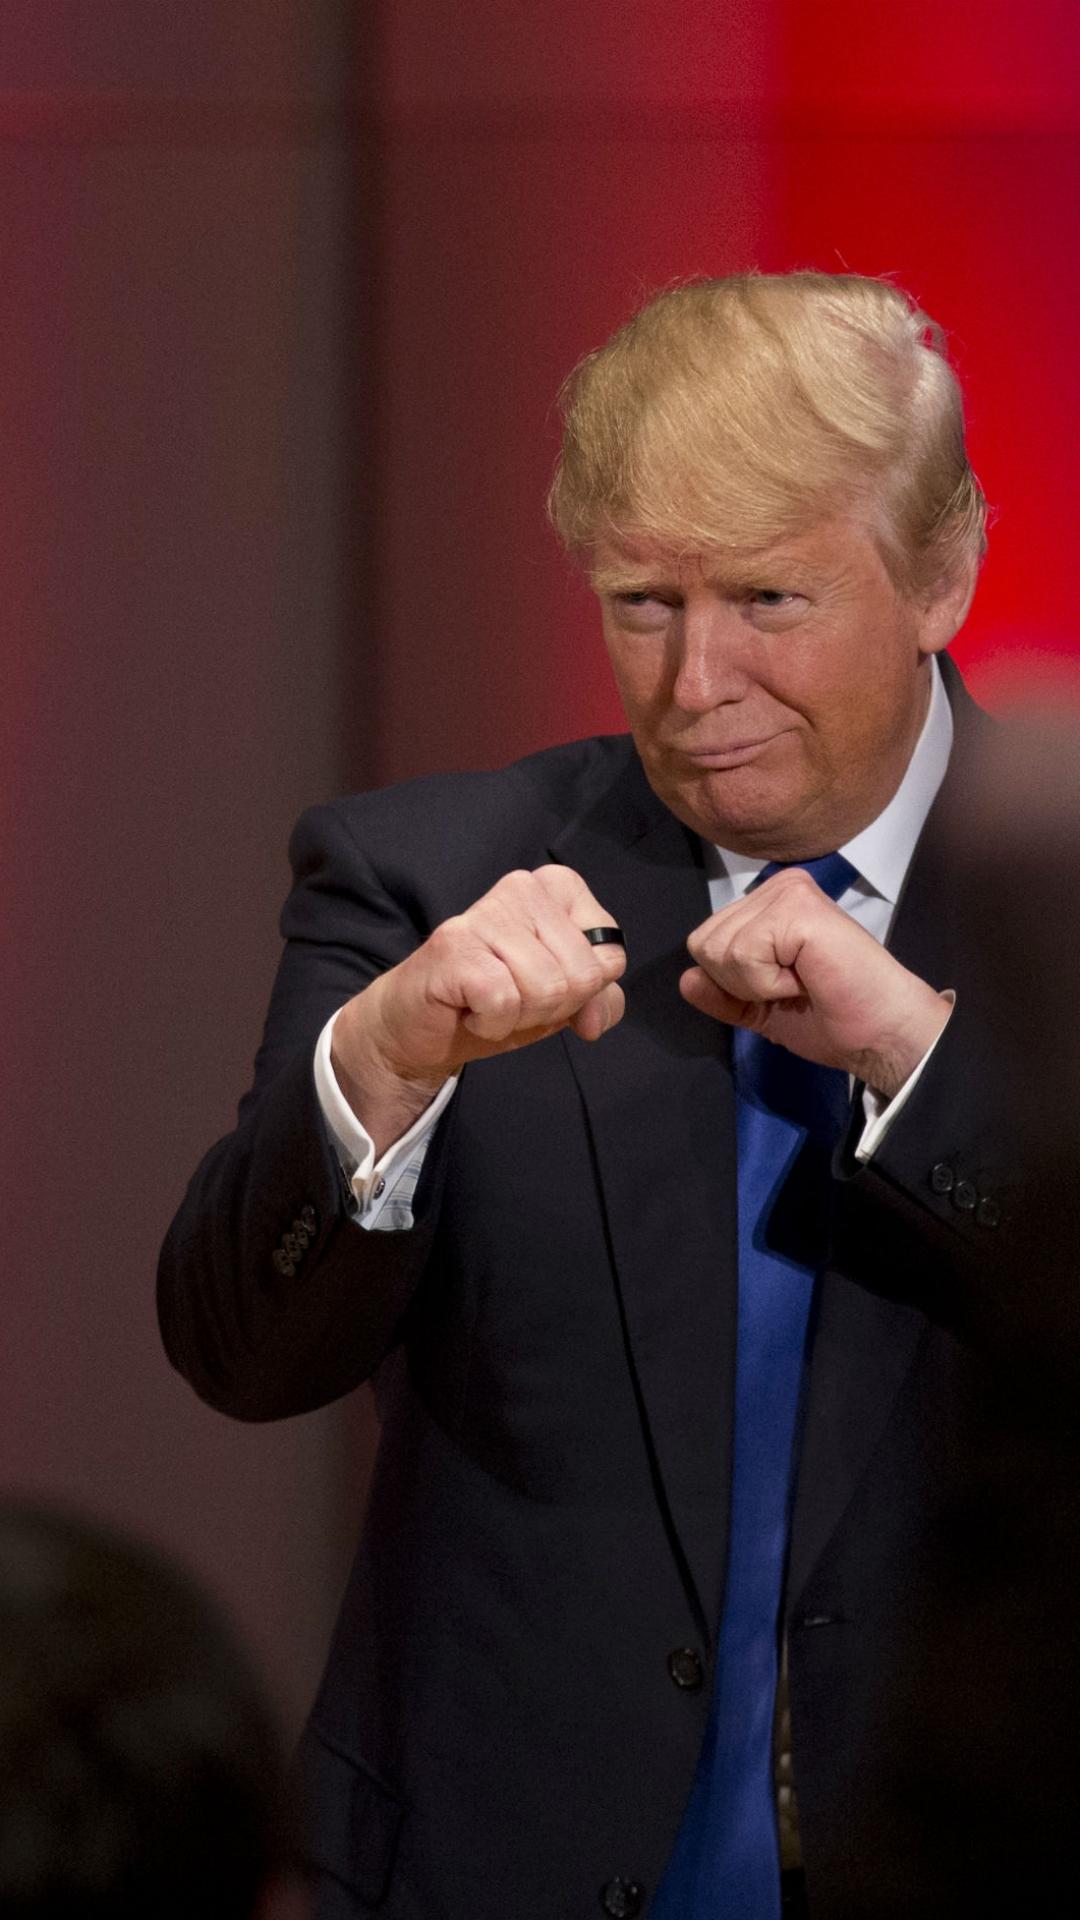 Donald Trump Fists Funny iPhone 8 Wallpaper Free Download